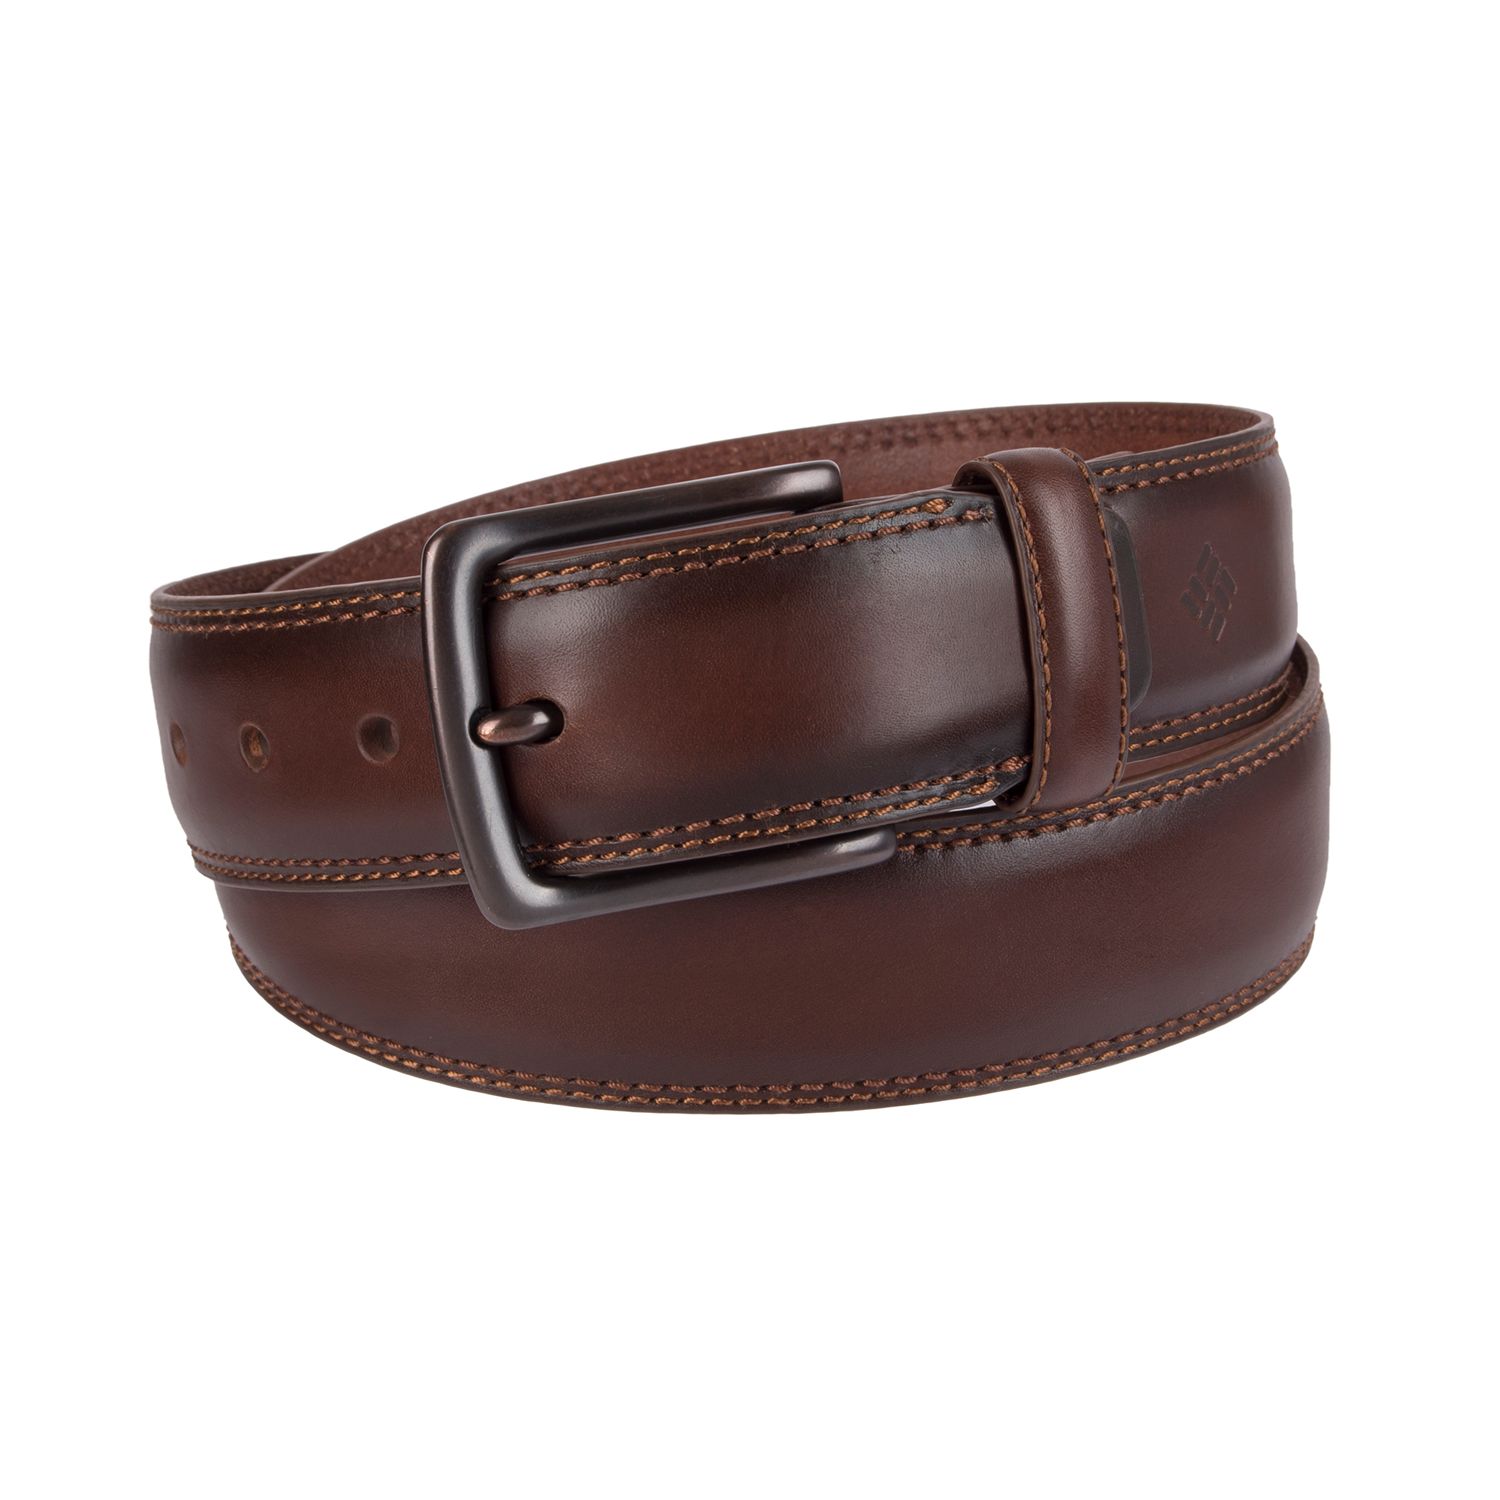 columbia men's casual leather belt